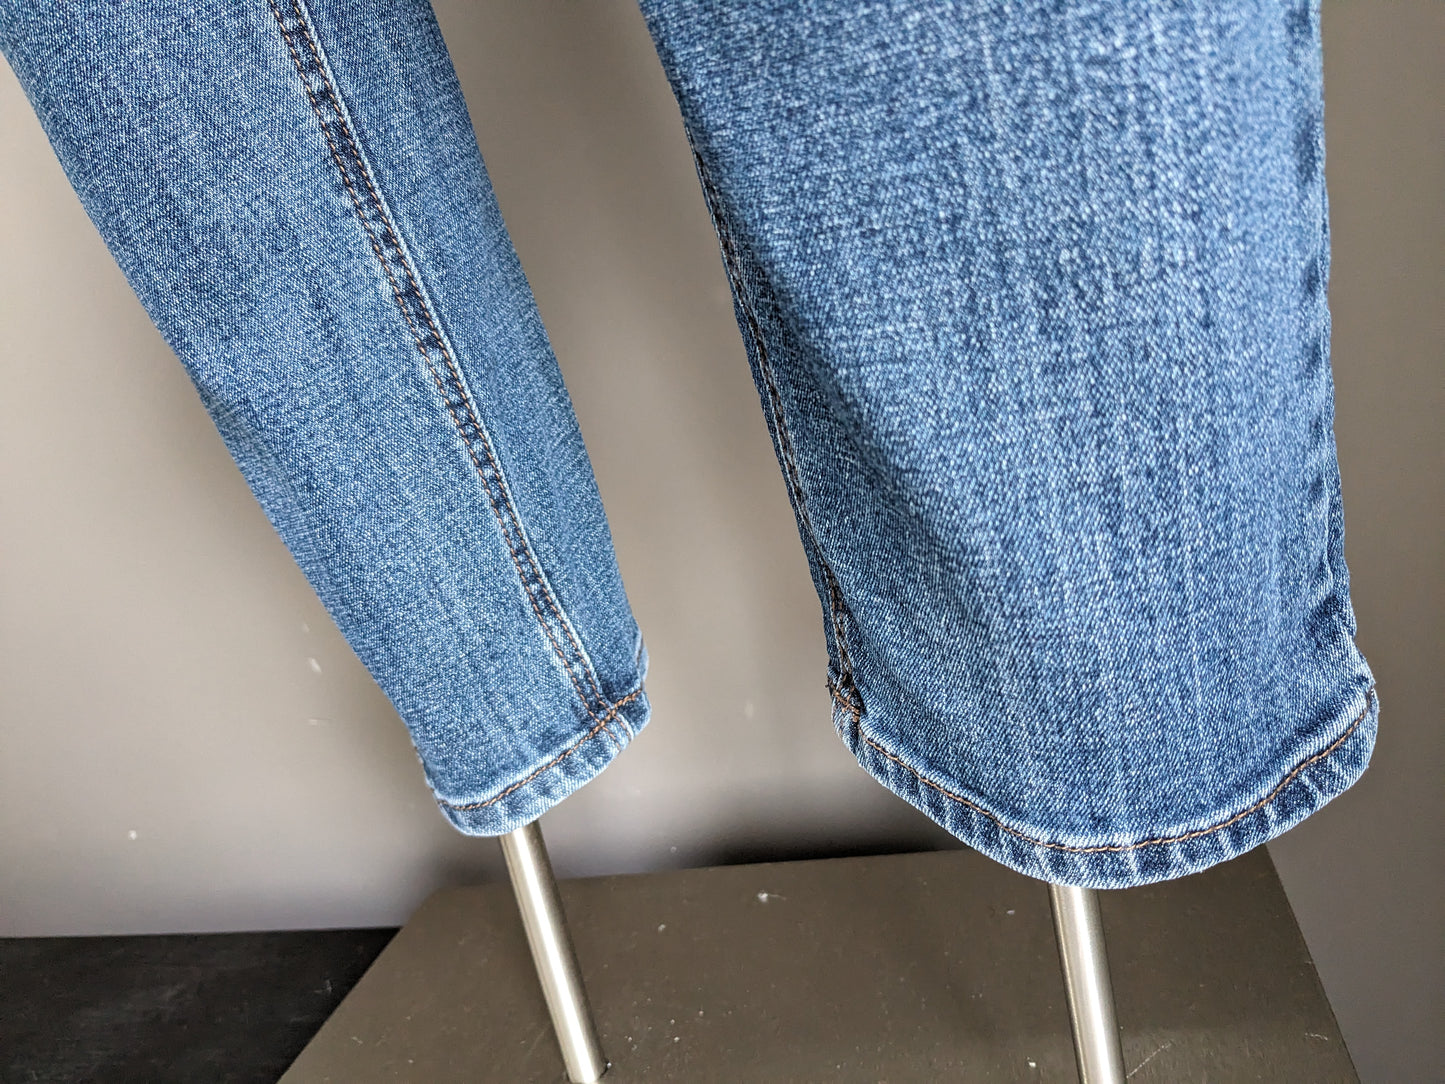 New Star Jeans. Couleur bleue. Taille W34 - L32. extensible.